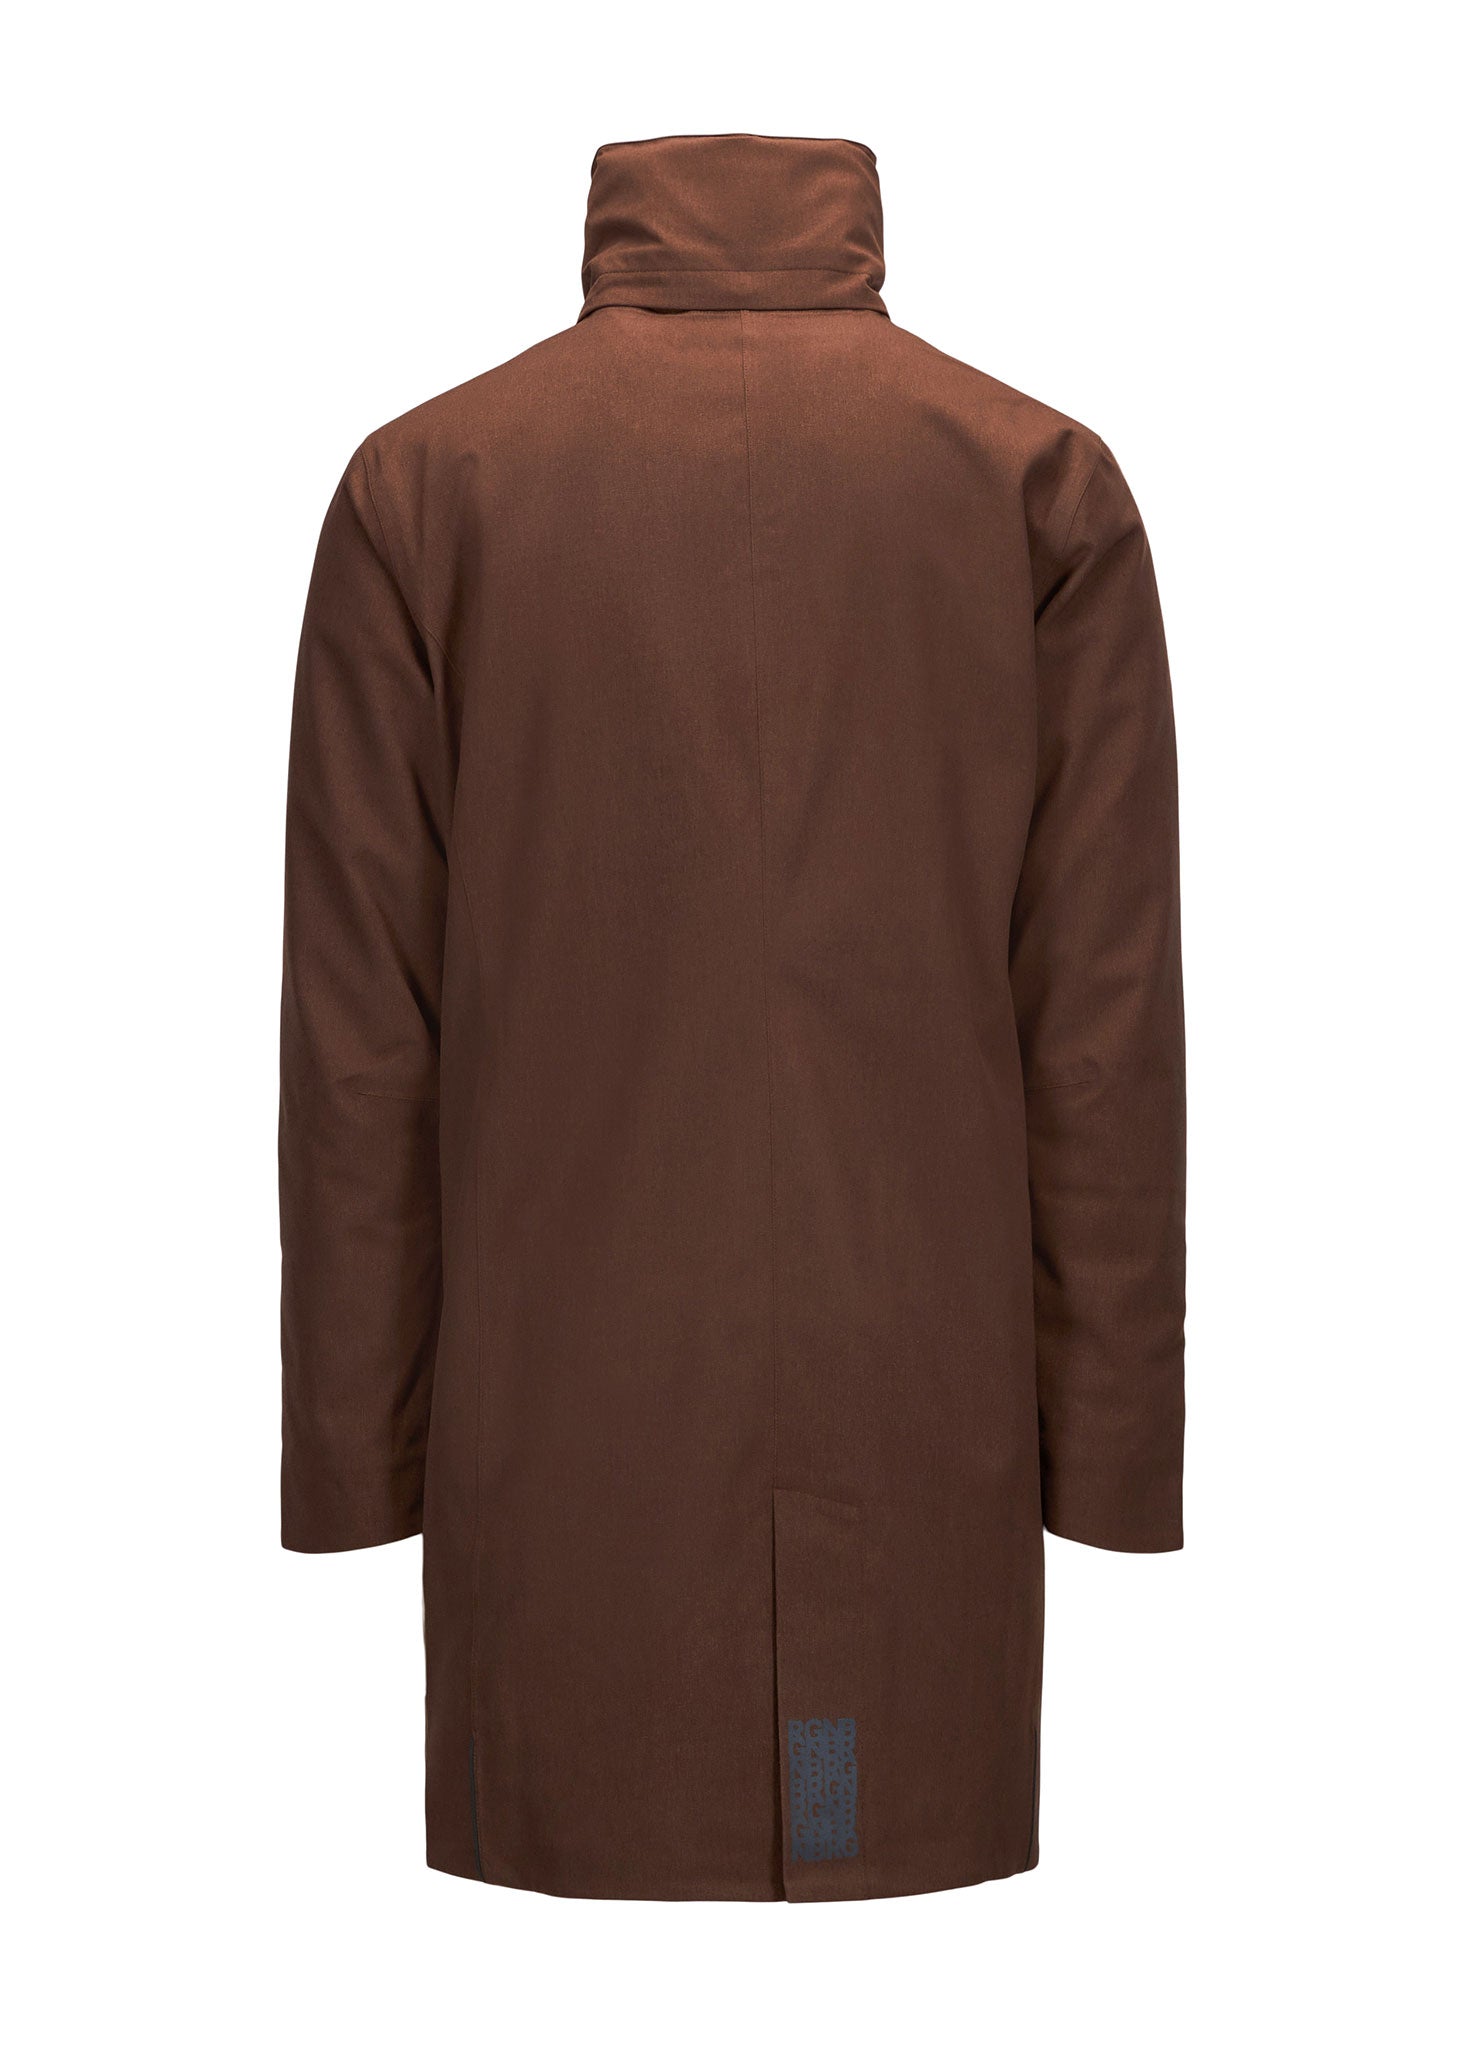 BRGN Sludd Coat Coats 187 Chocolate Brown